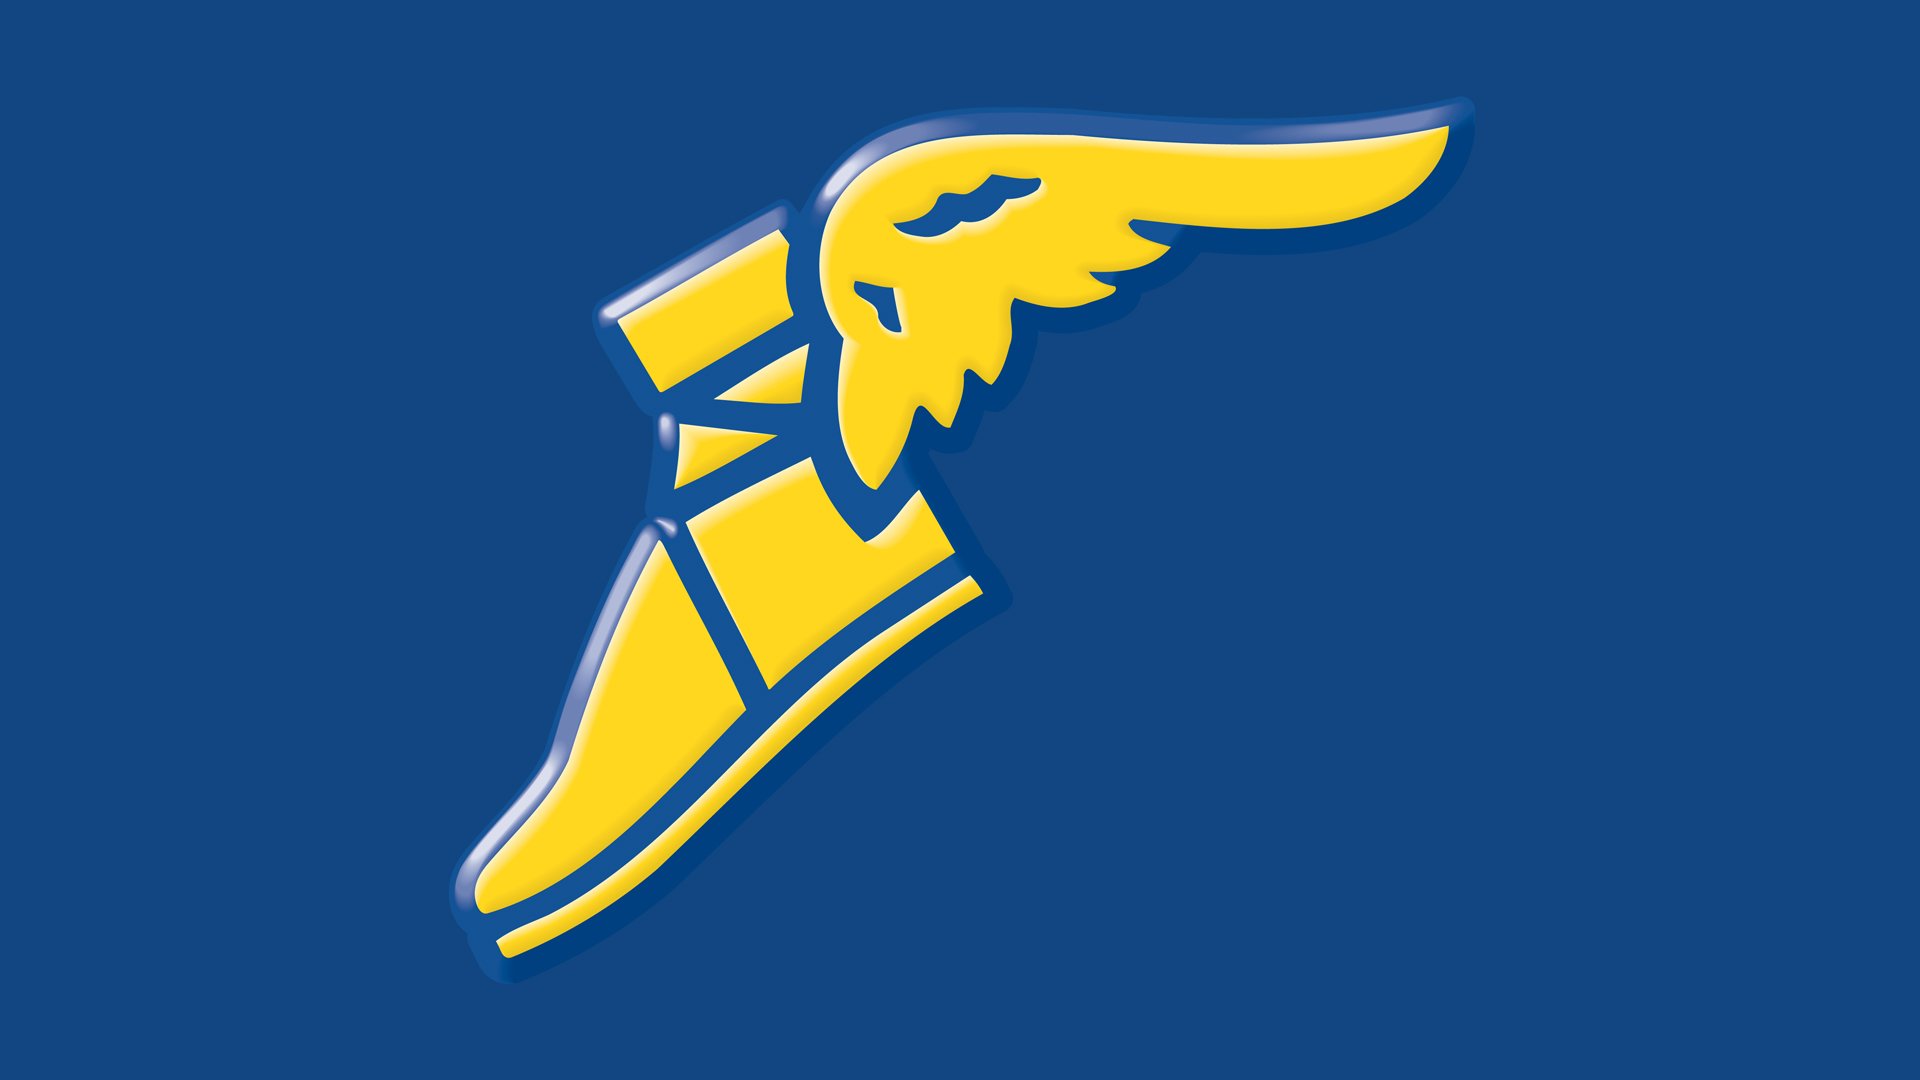 tweeling Hallo Uitvoeren Goodyear Logo and symbol, meaning, history, PNG, brand